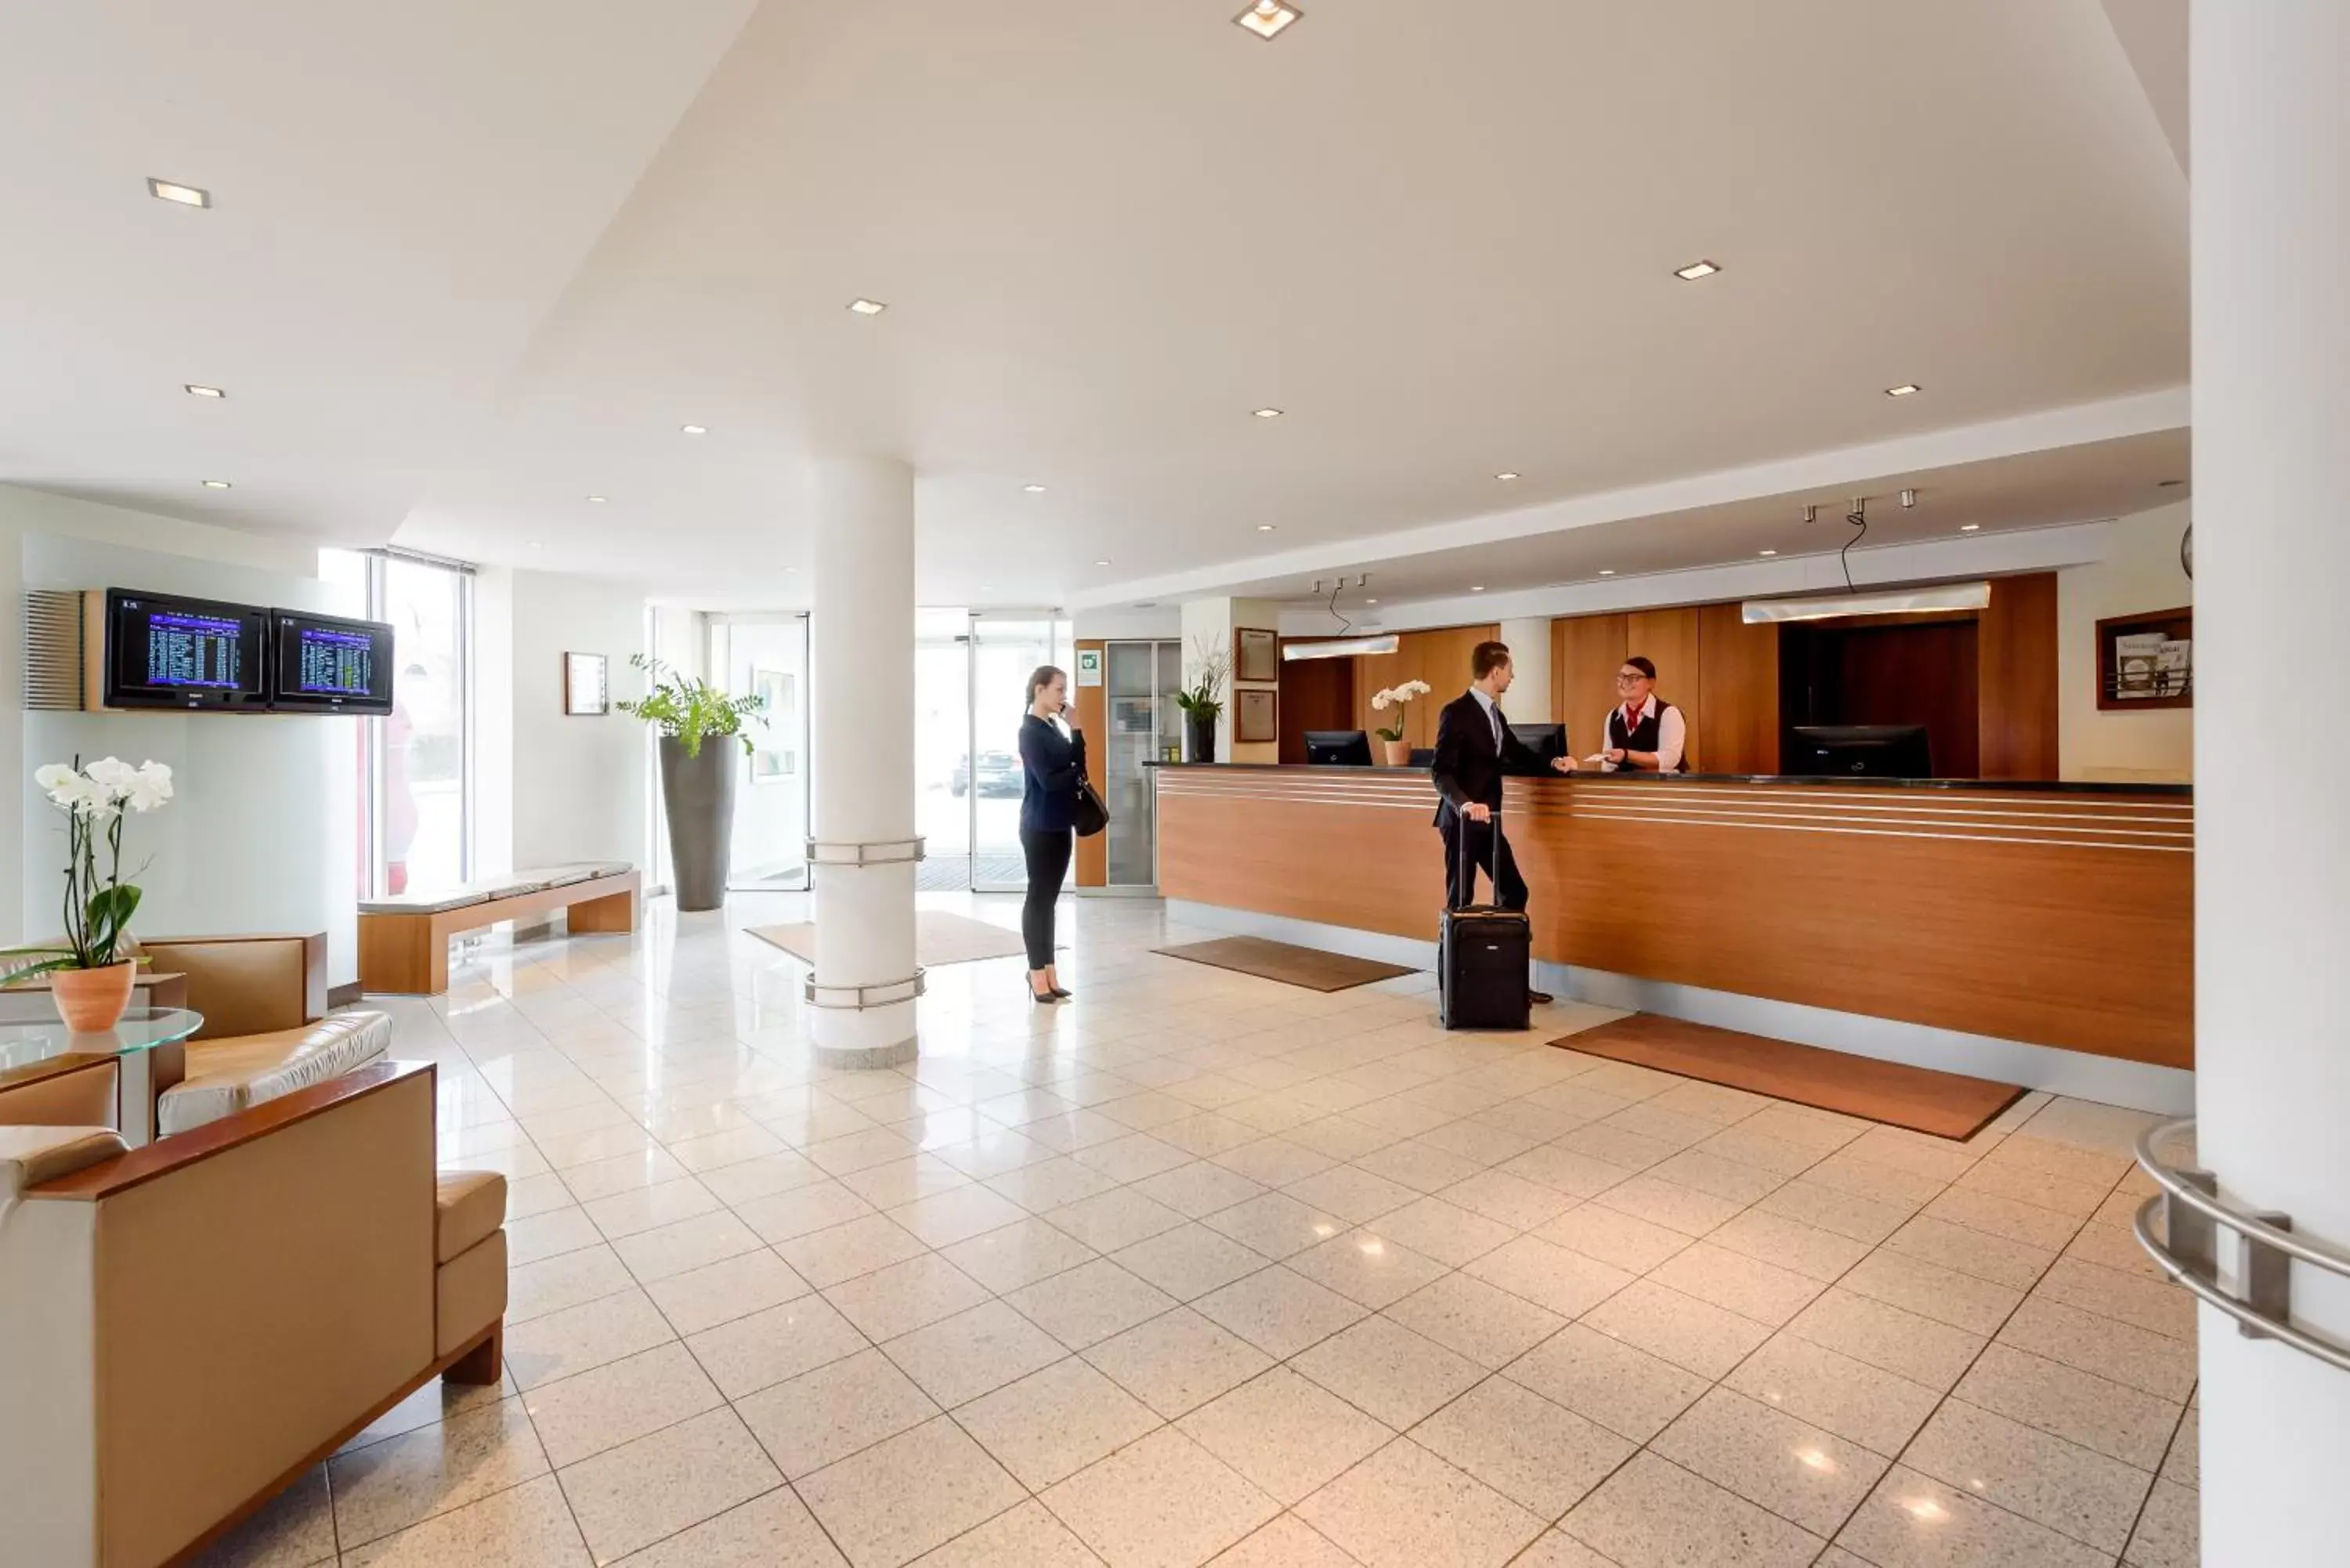 Lobby or reception in Mercure Hotel München Airport Freising